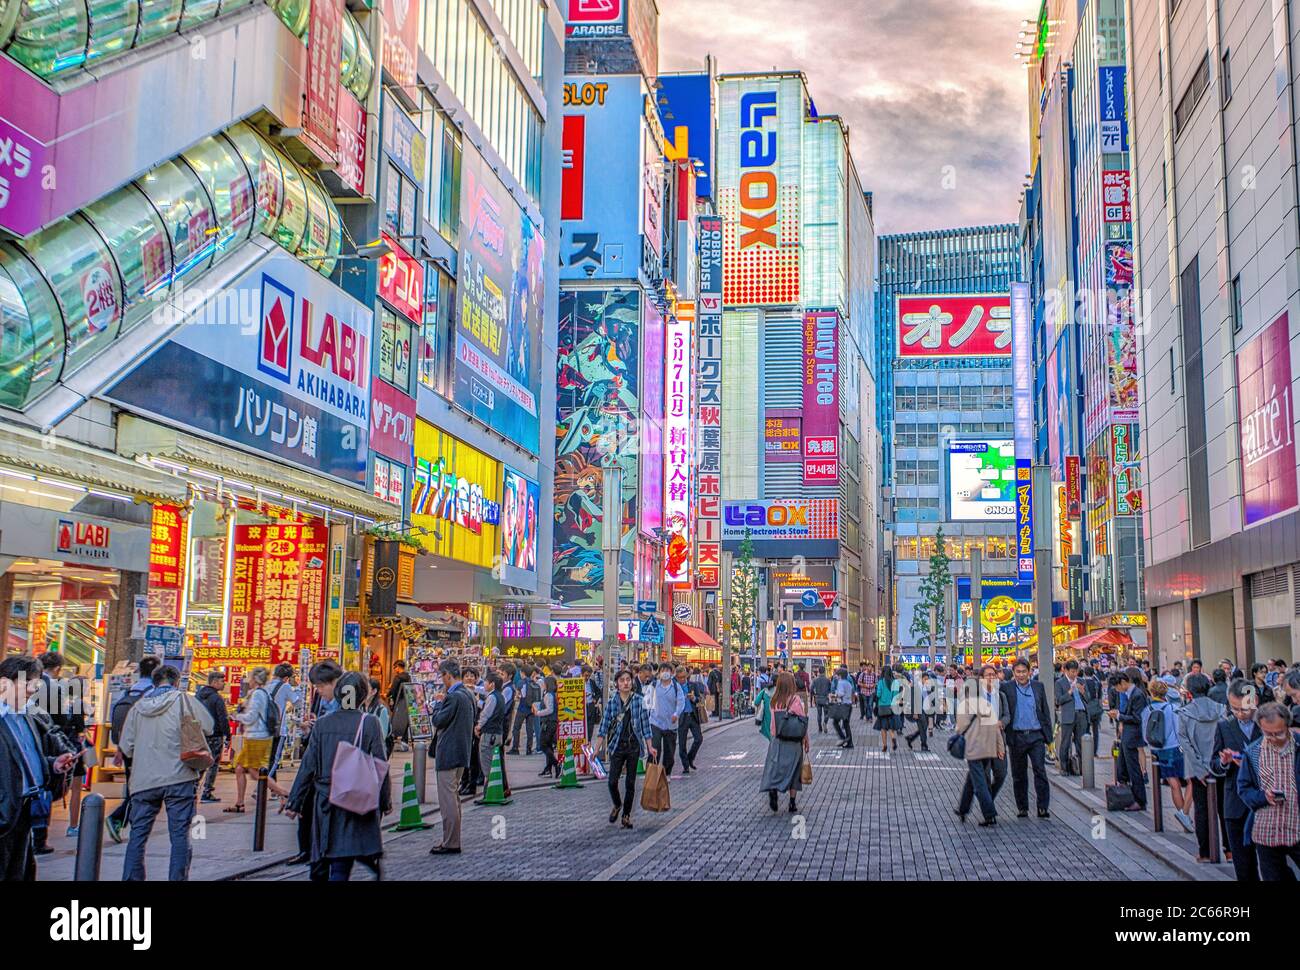 Japan, Tokyo City, Akihabara disterict, Electric Town street Stock Photo